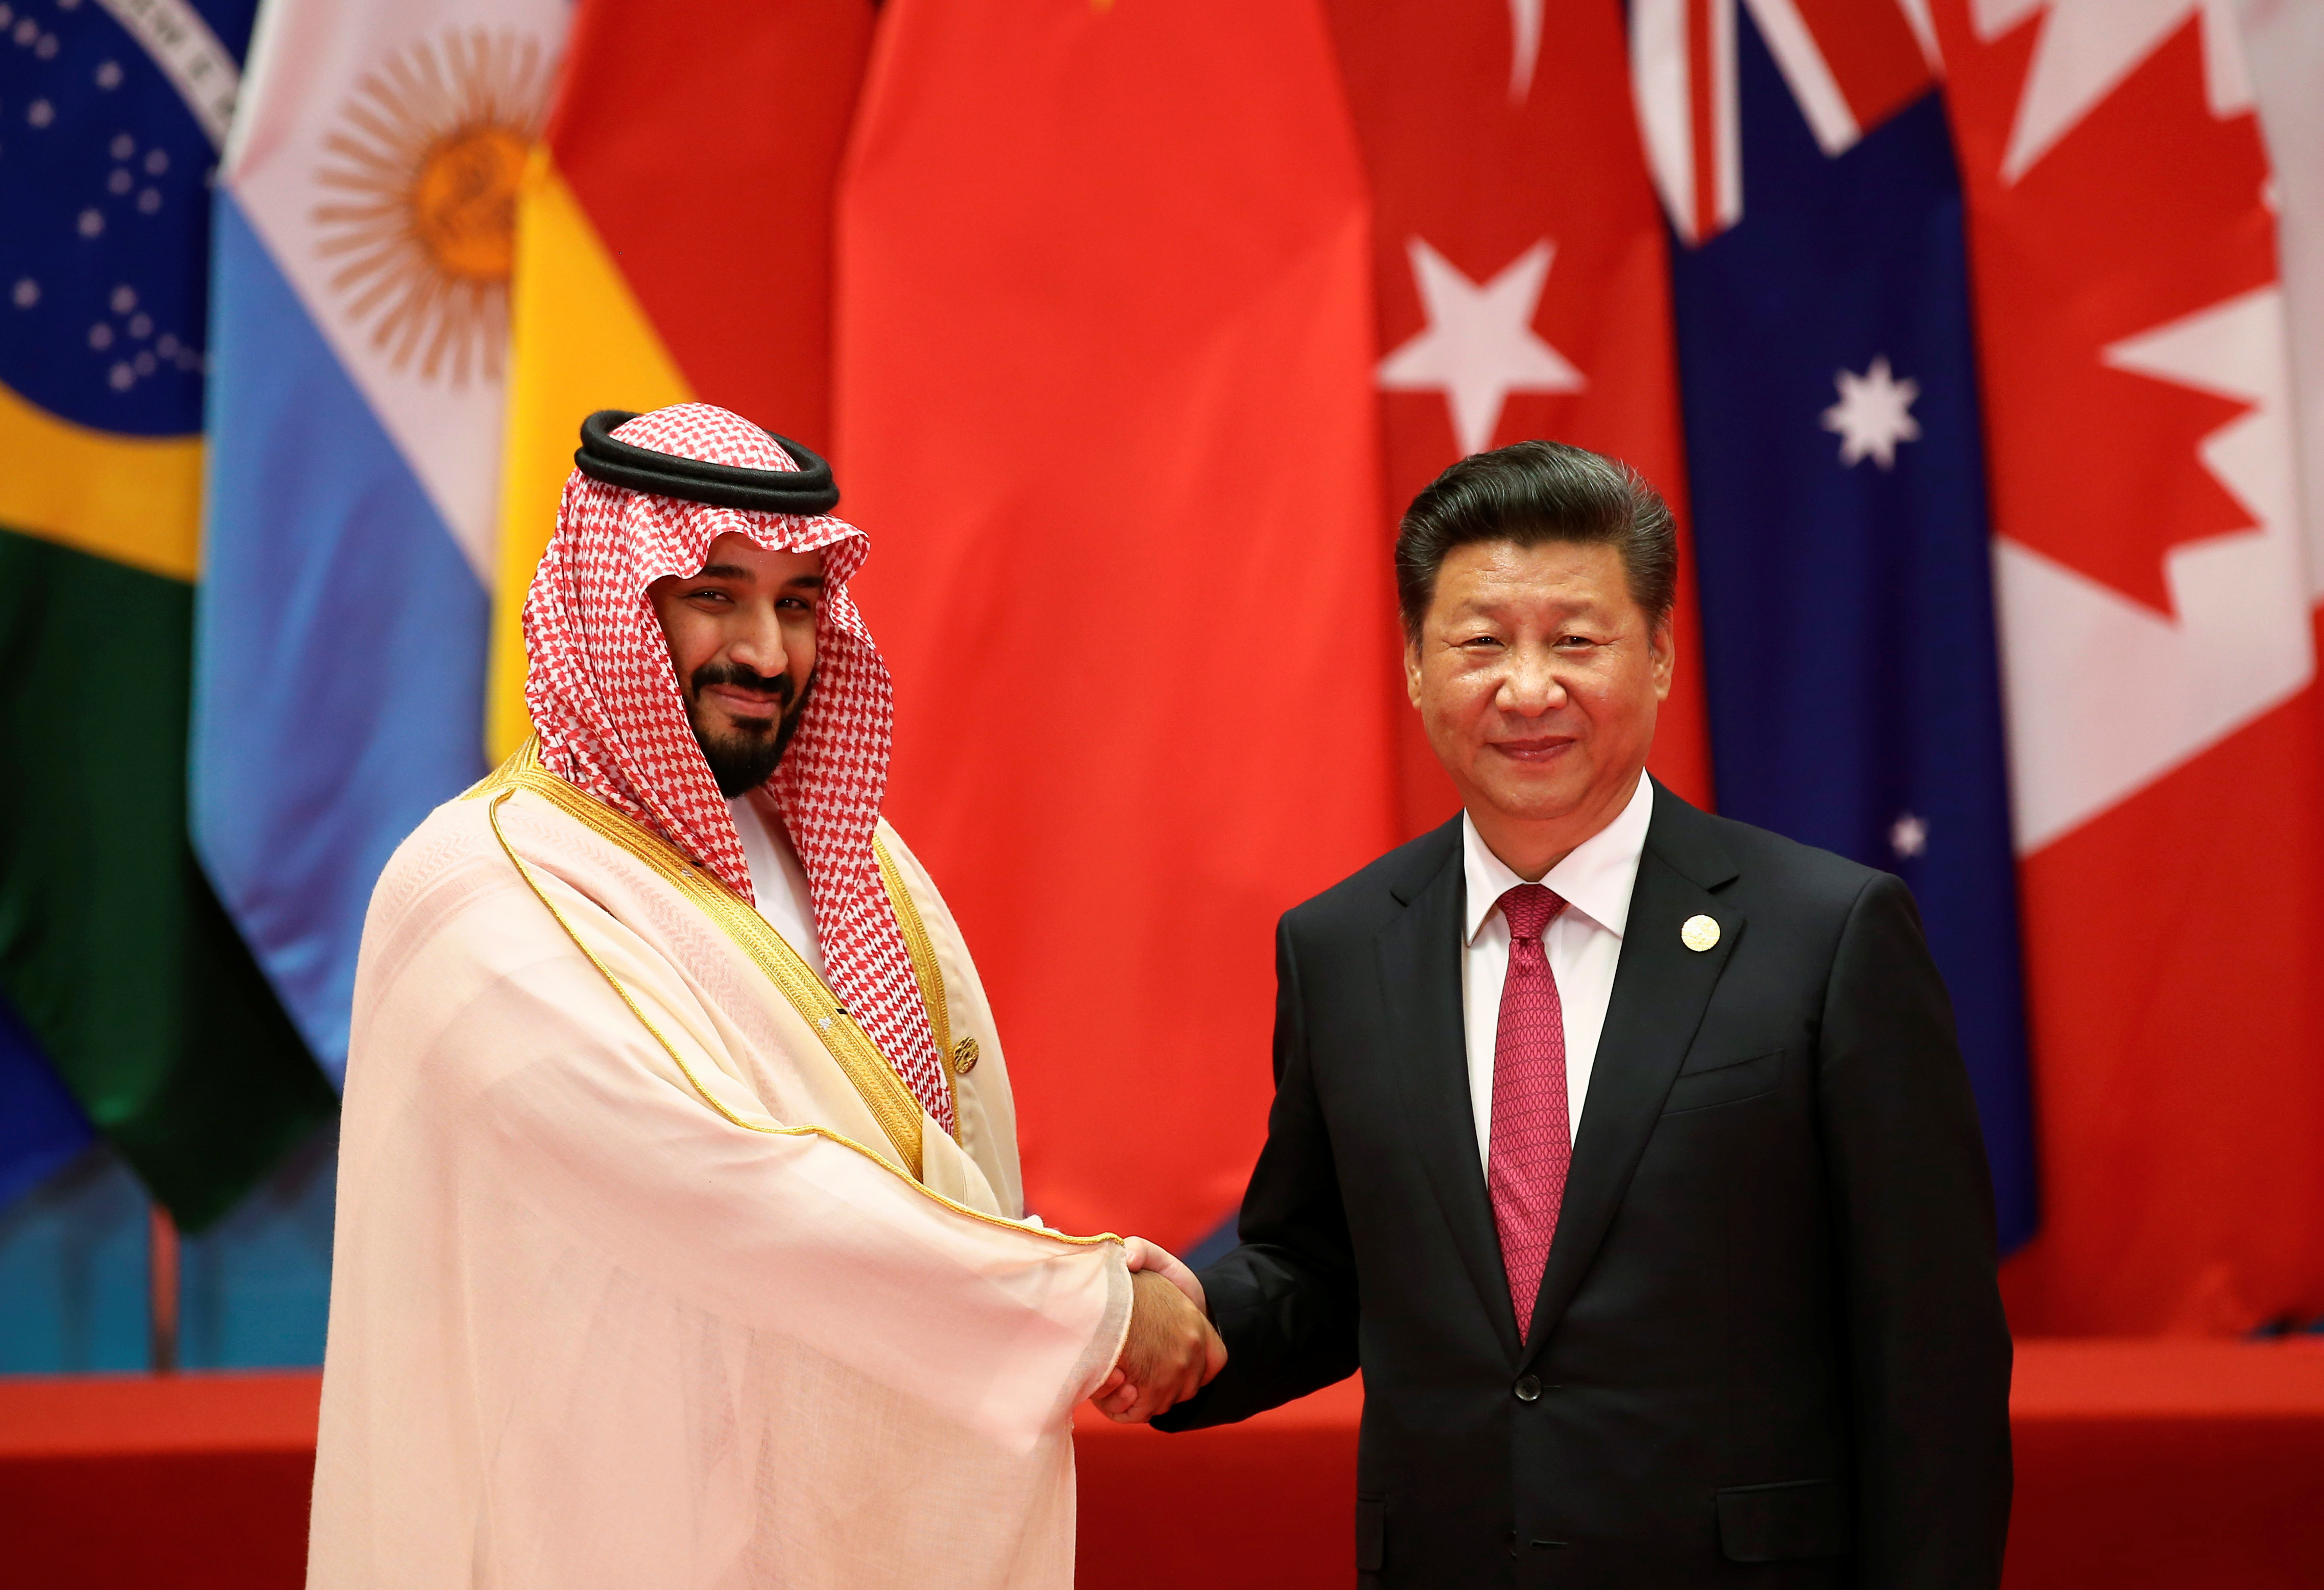 Saudi Arabia invites China's Xi to visit - WSJ | Reuters